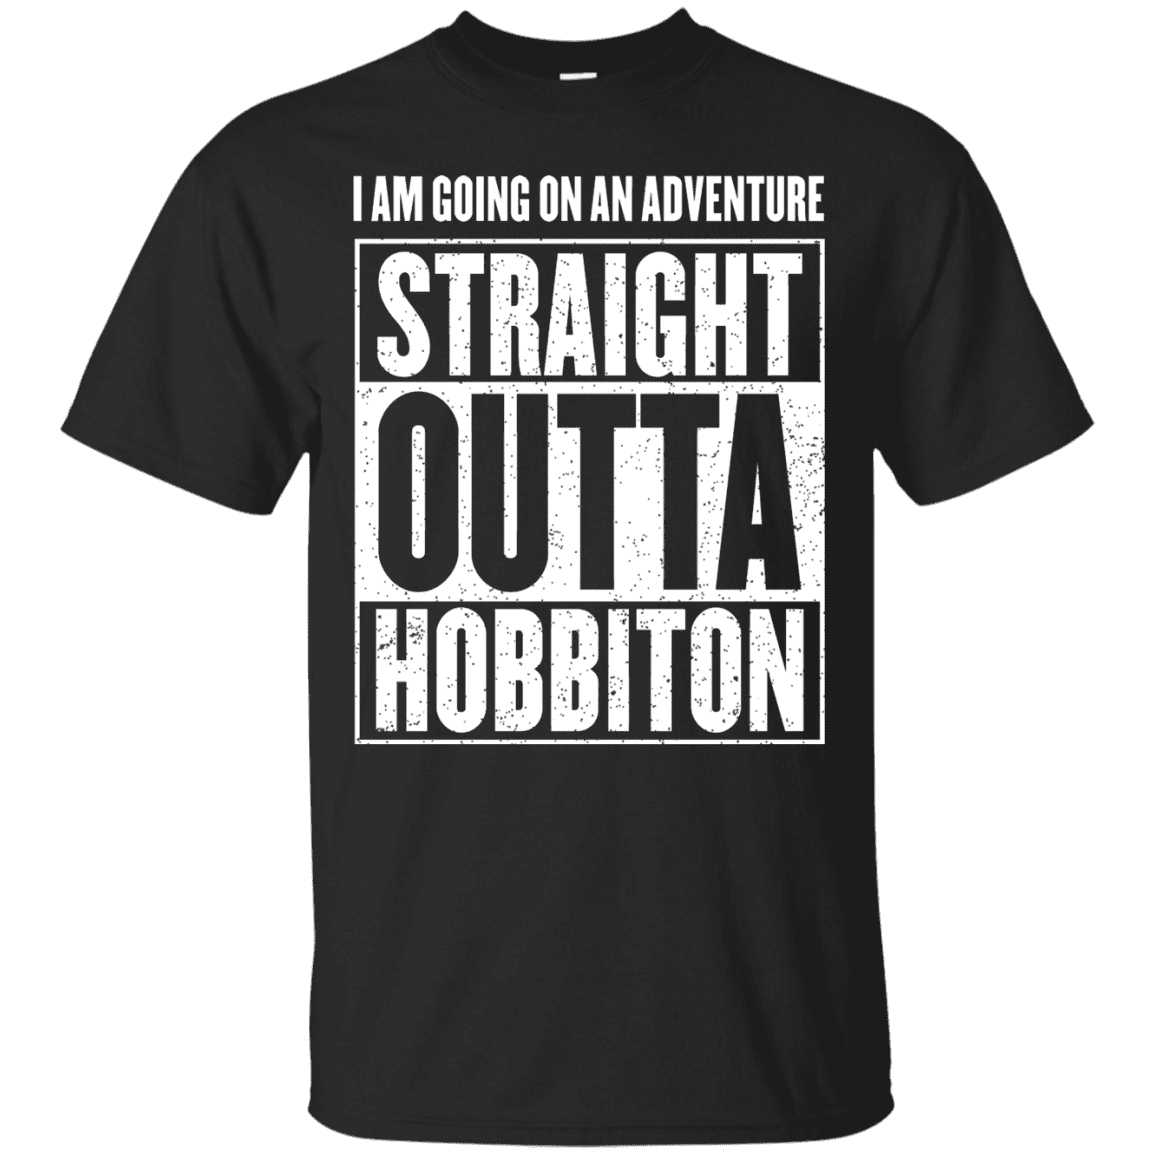 T-Shirts Black / S Straight Outta Hobbiton T-Shirt